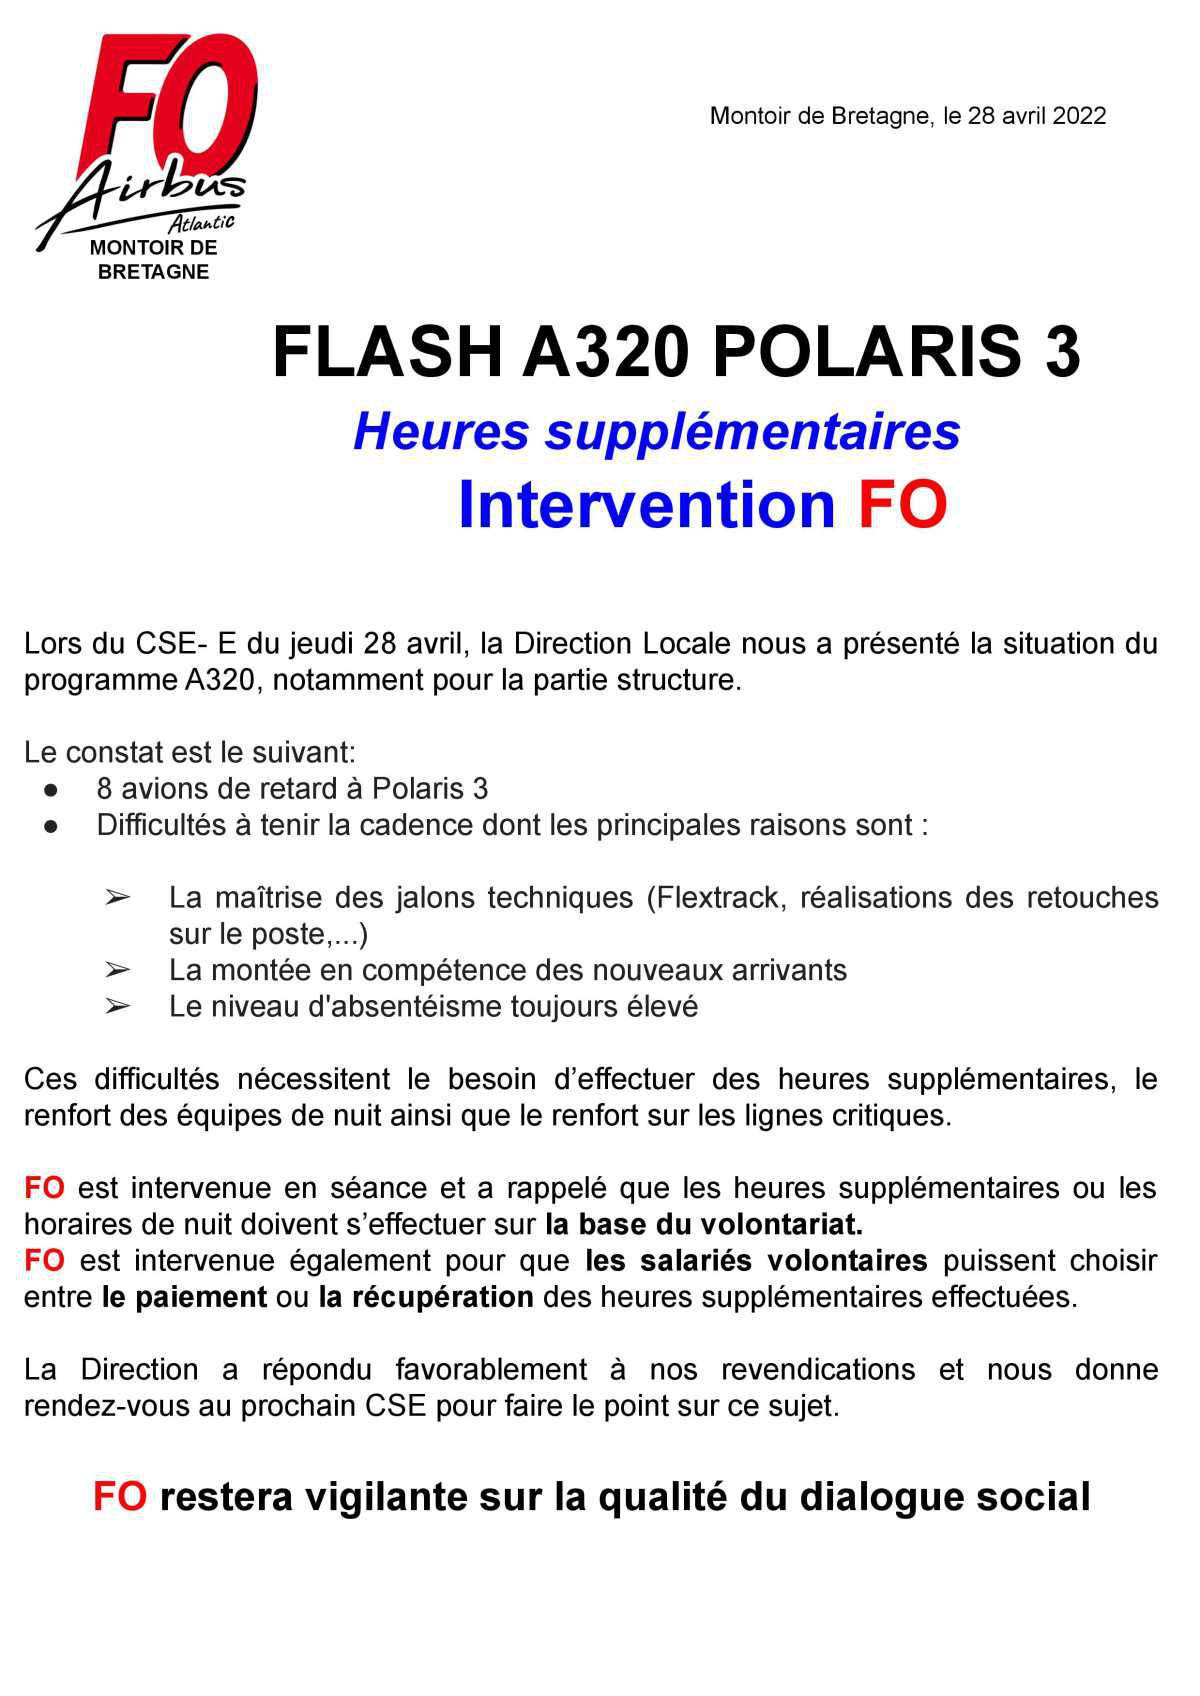 A320 Polaris : Heures Supplémentaires => Intervention FO en CSE-E du 28 04 22